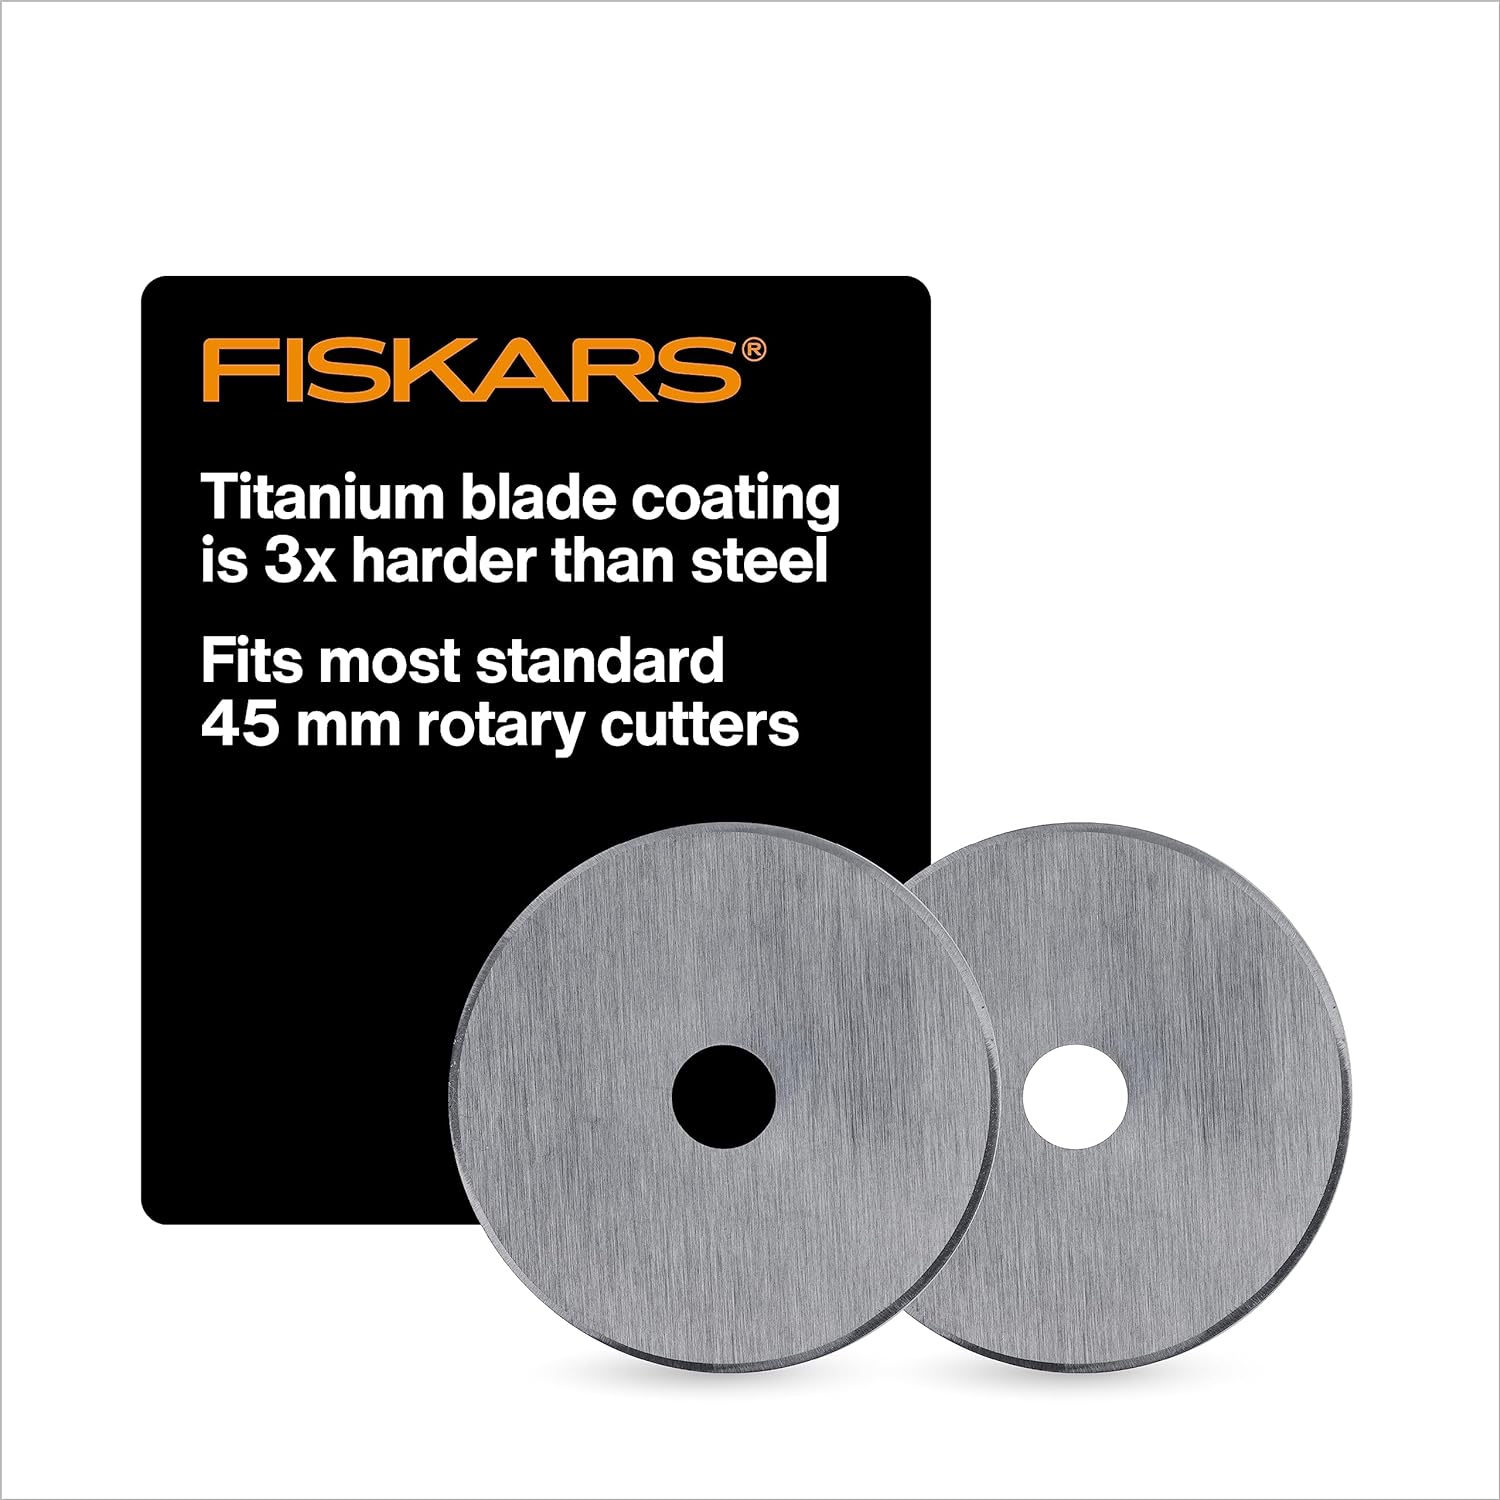 Fiskars 158290-1001 Titanium Rotaty Cutter Replacement Blades, 45mm, 2 Pack, Silver